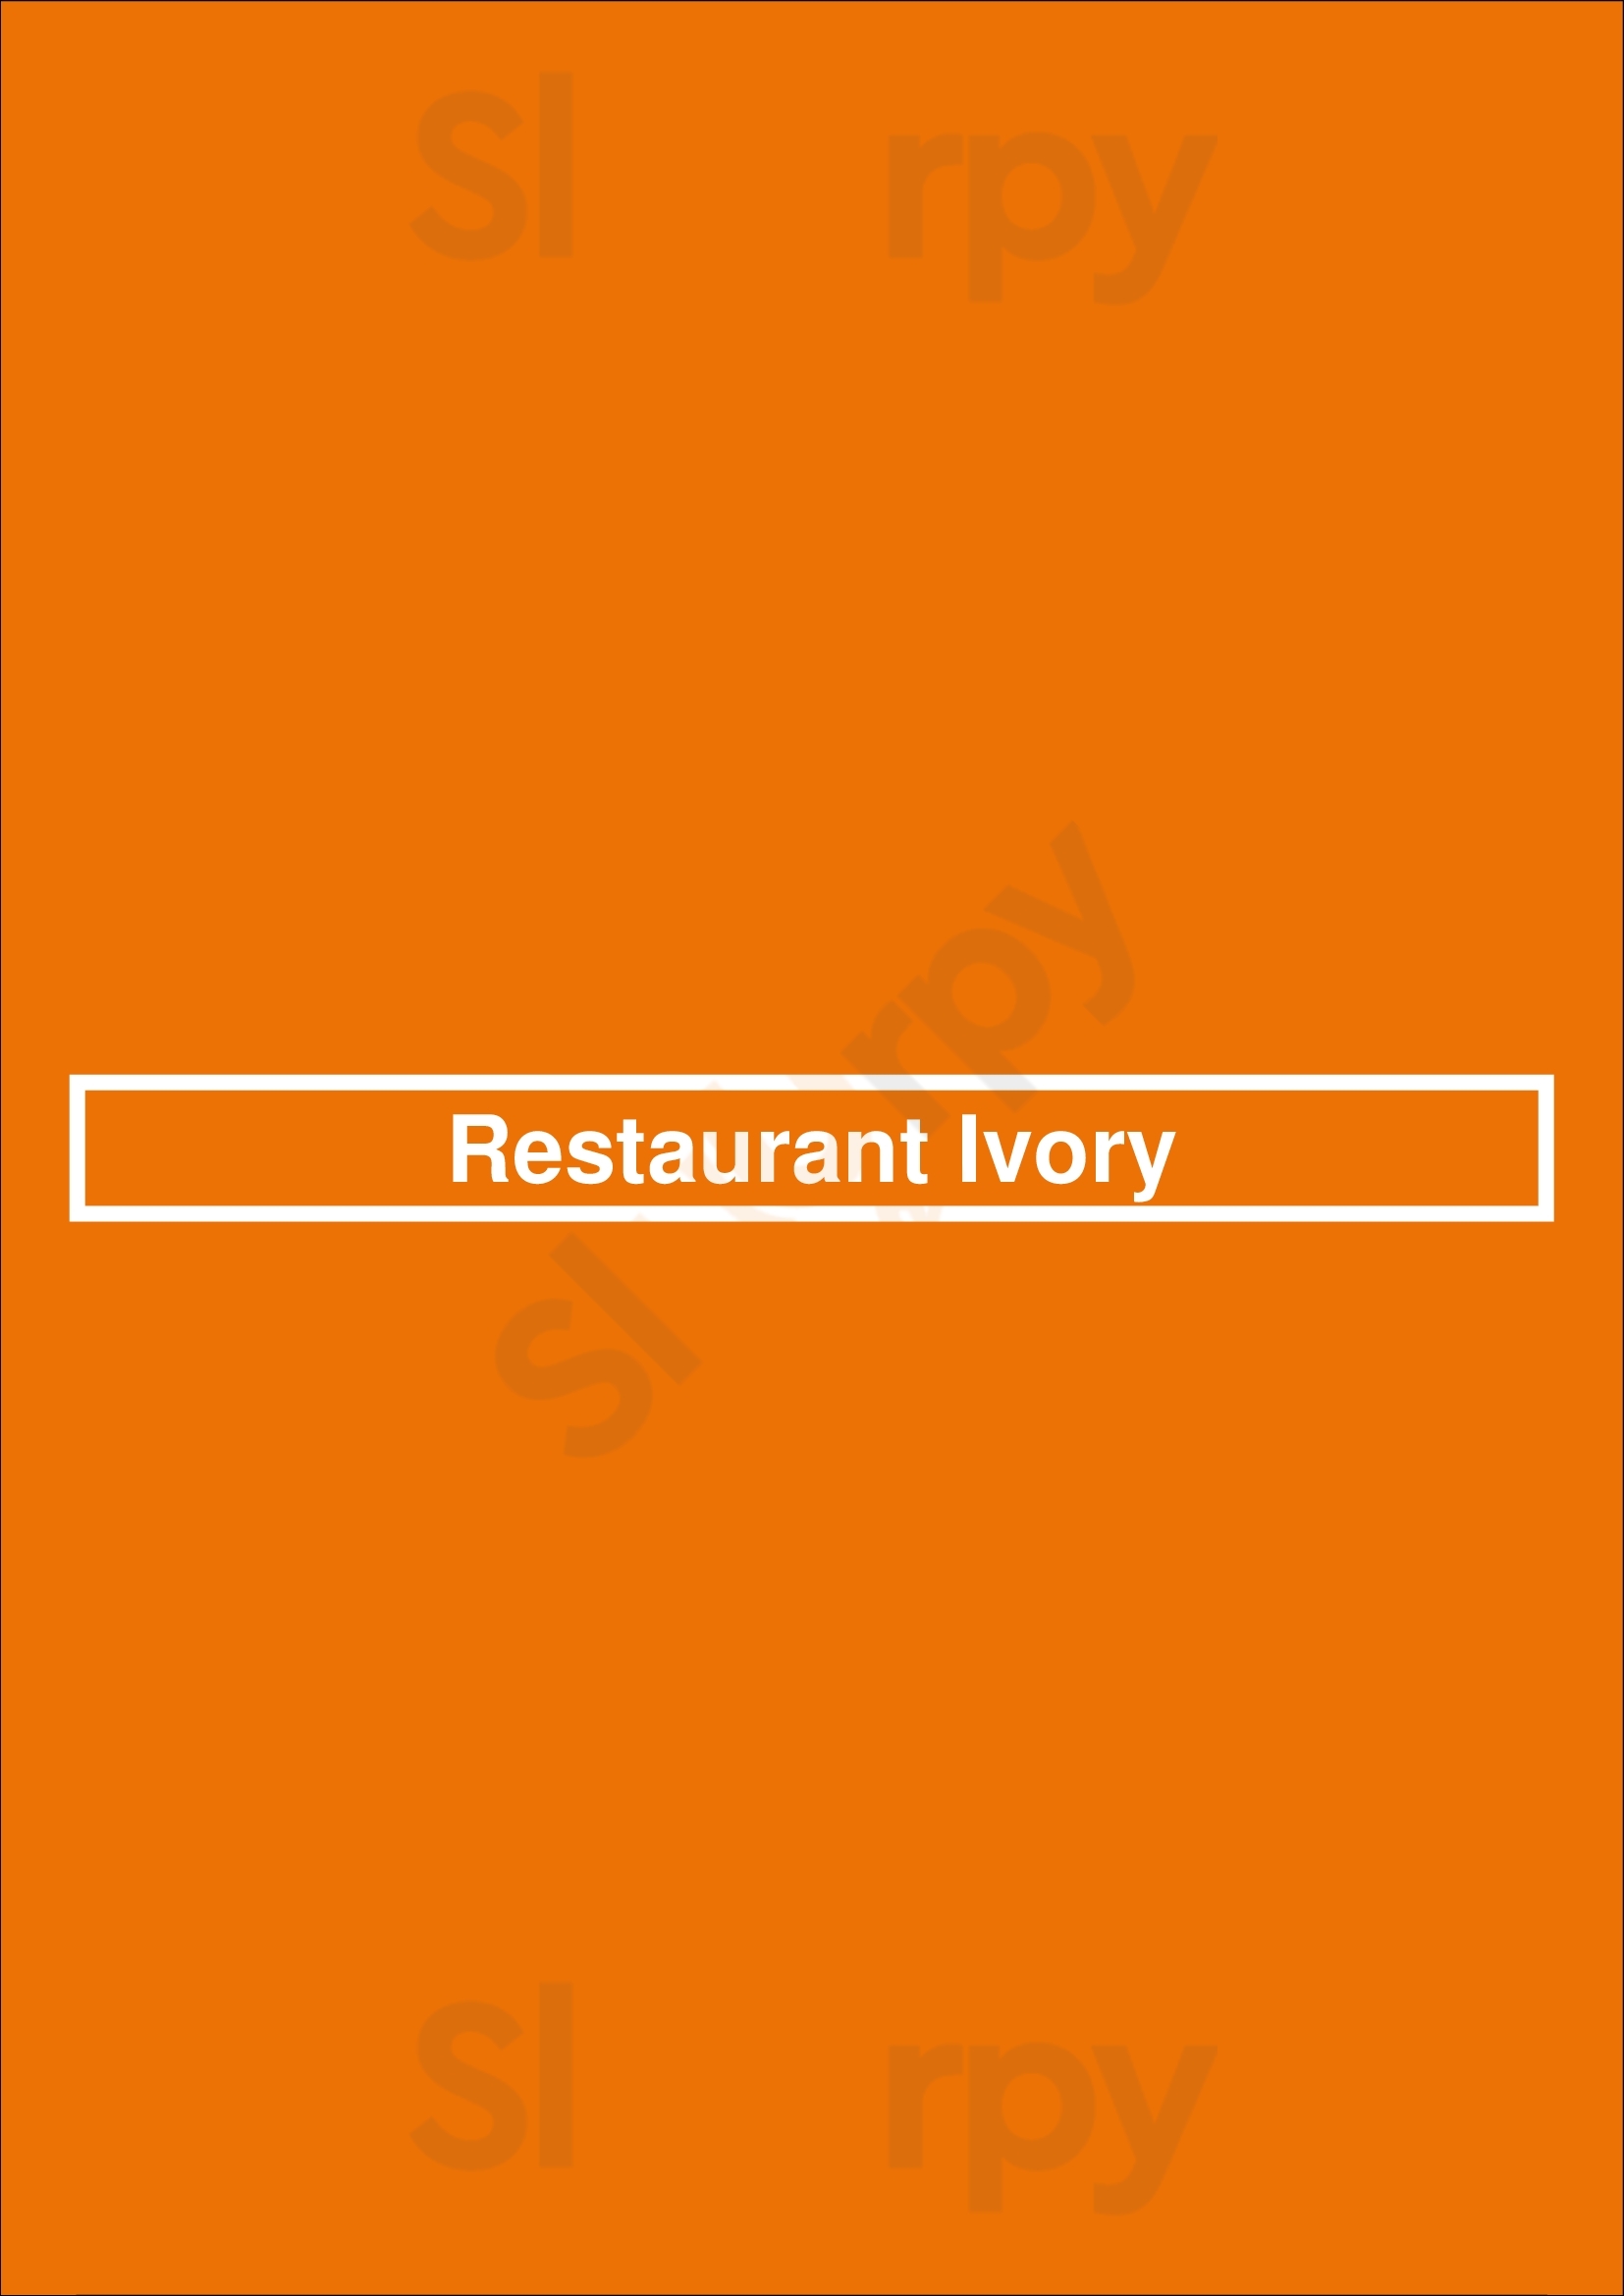 Restaurant Ivory Nijmegen Menu - 1